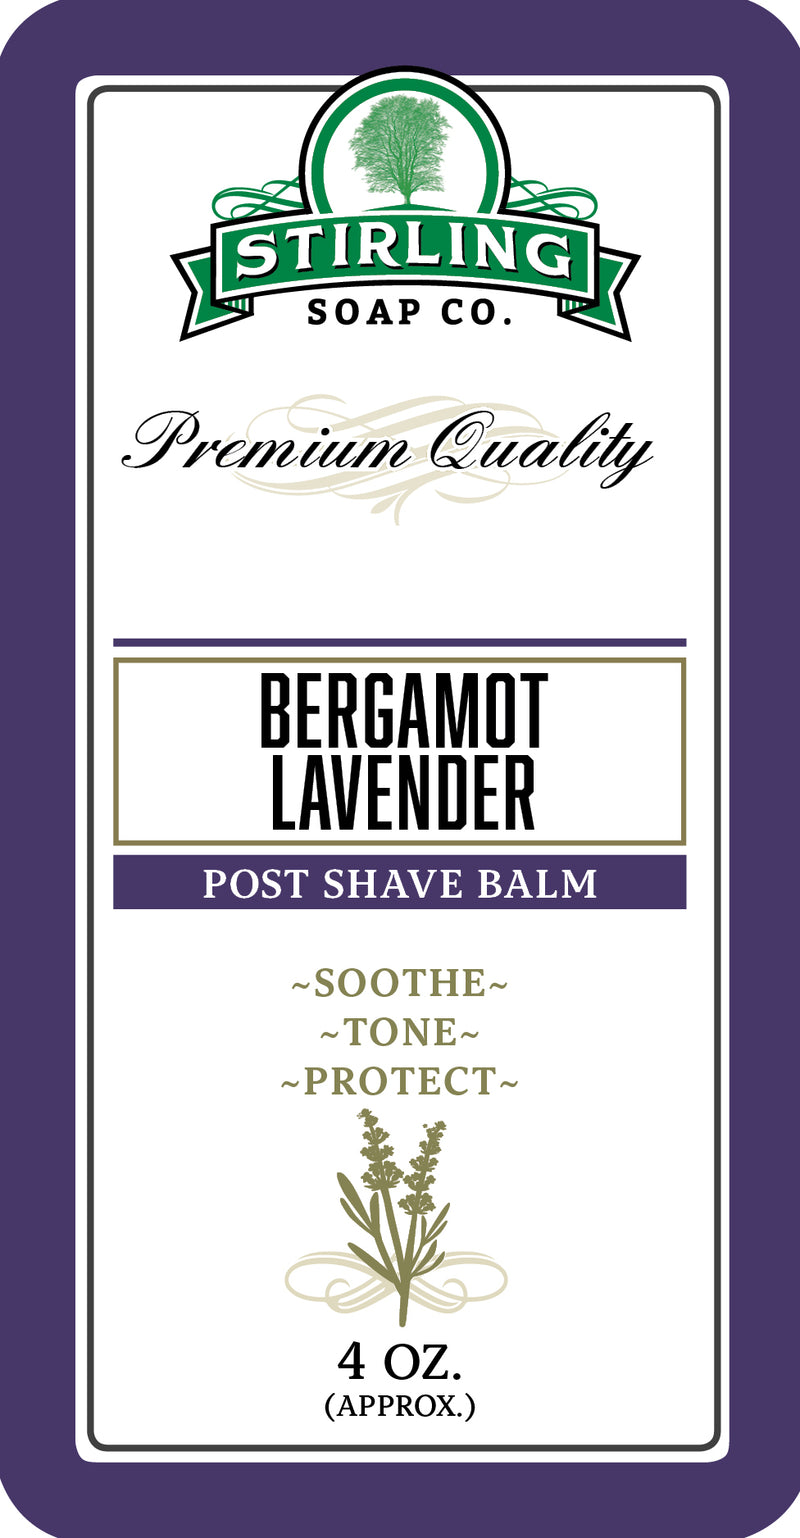 Bergamot Lavender - Post-Shave Balm